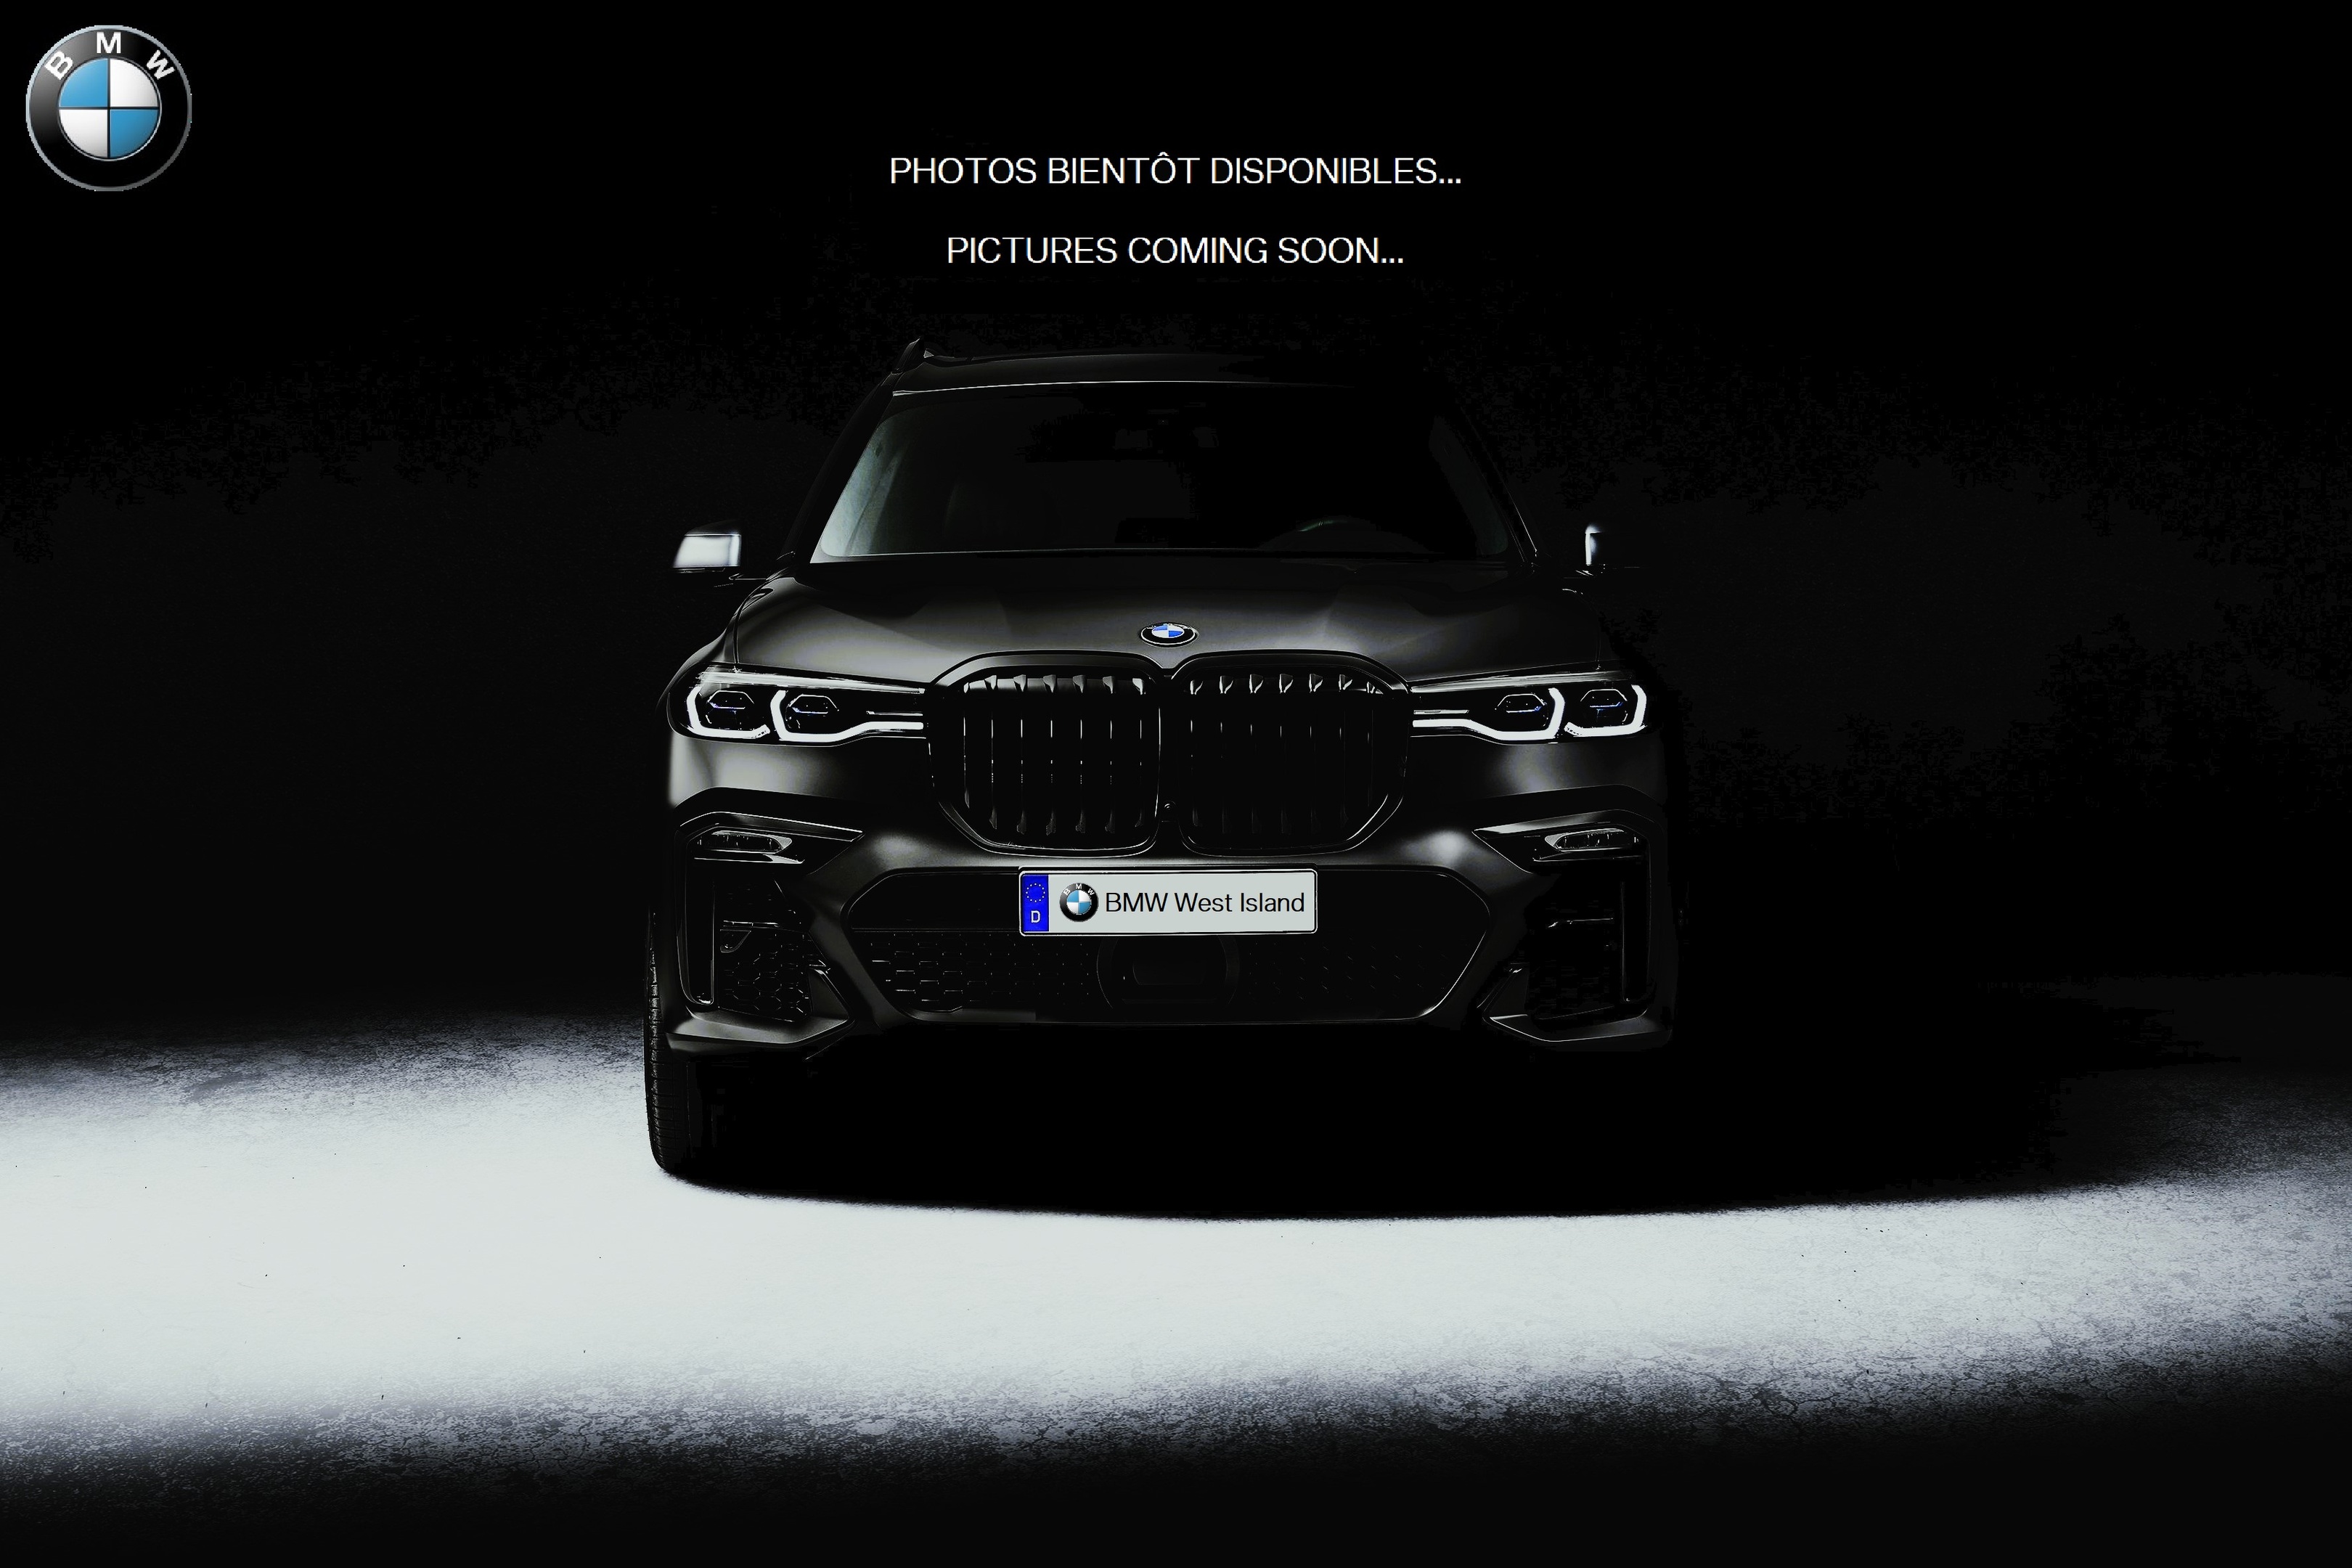 2020 BMW X3 Série Certifié de BMW - Premium Essential Package